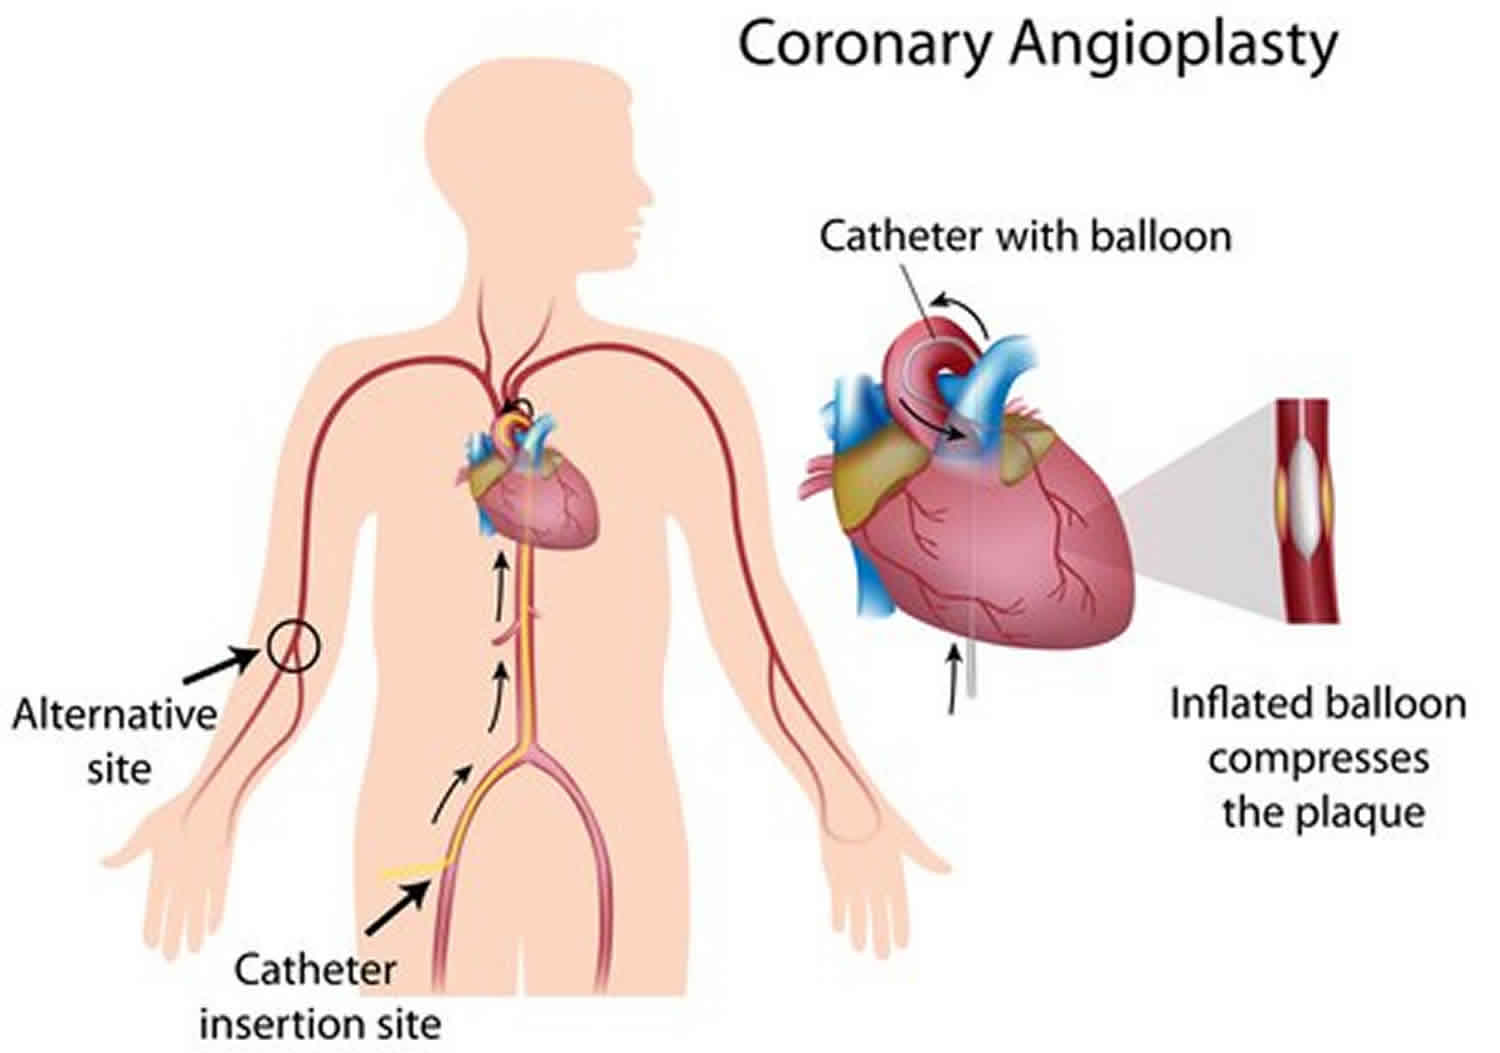 PTCA procedure, percutaneous coronary angioplasty, benefits & risks